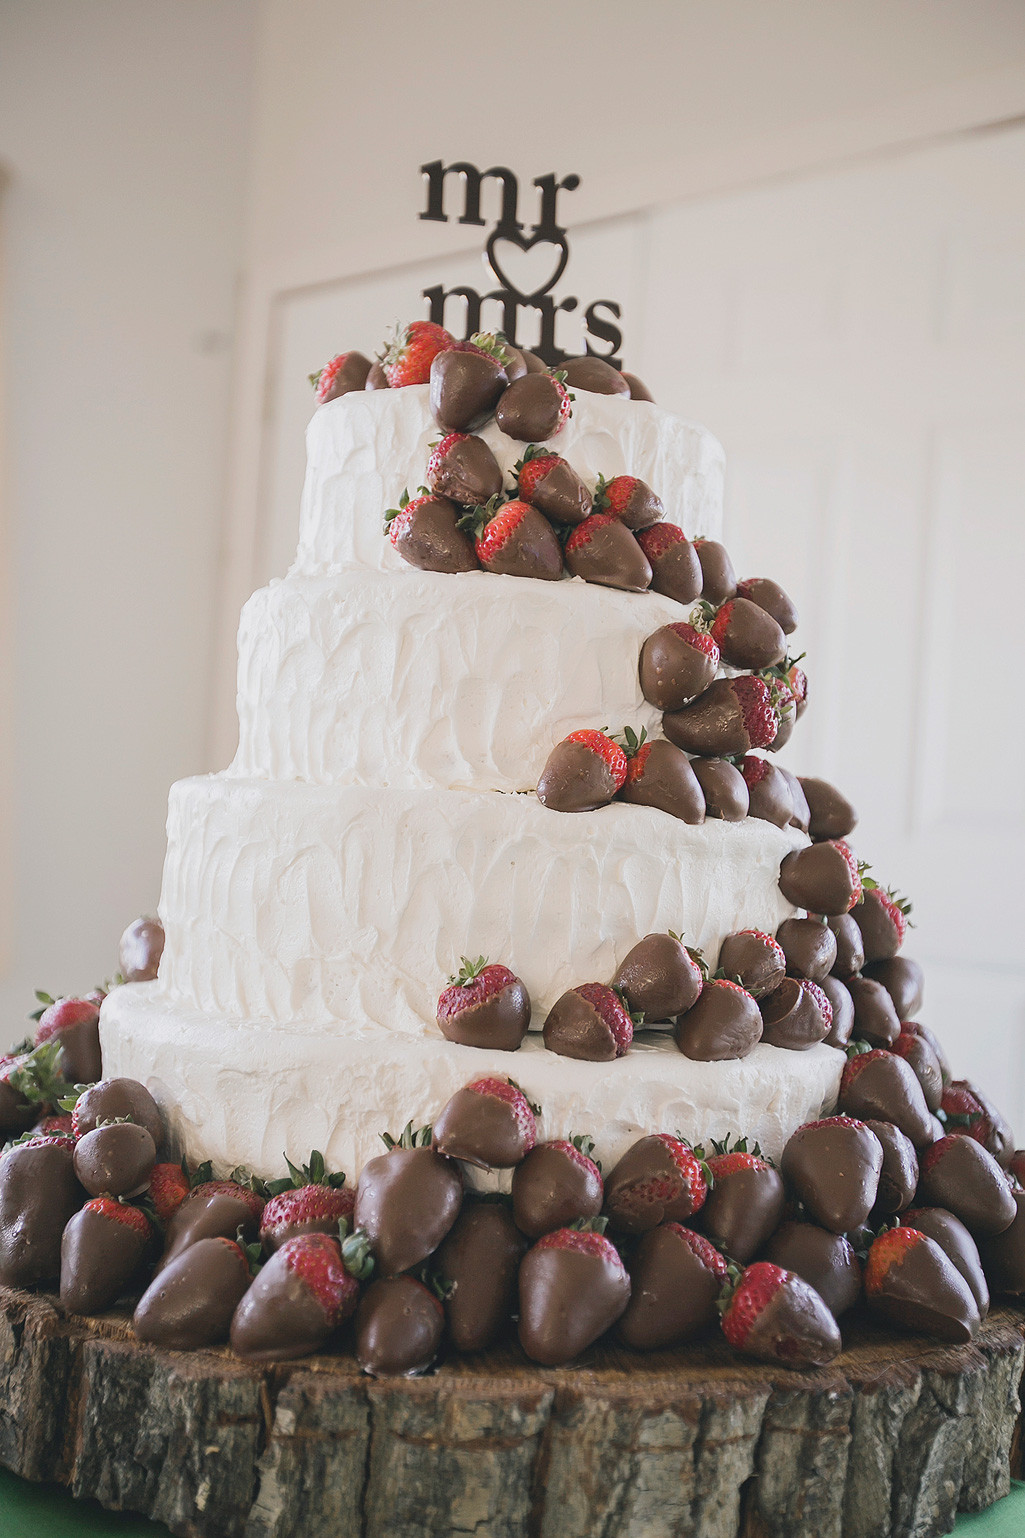 Chocolate Covered Strawberries Wedding Cakes 20 Ideas for Bright Diy Fall Weddingtruly Engaging Wedding Blog